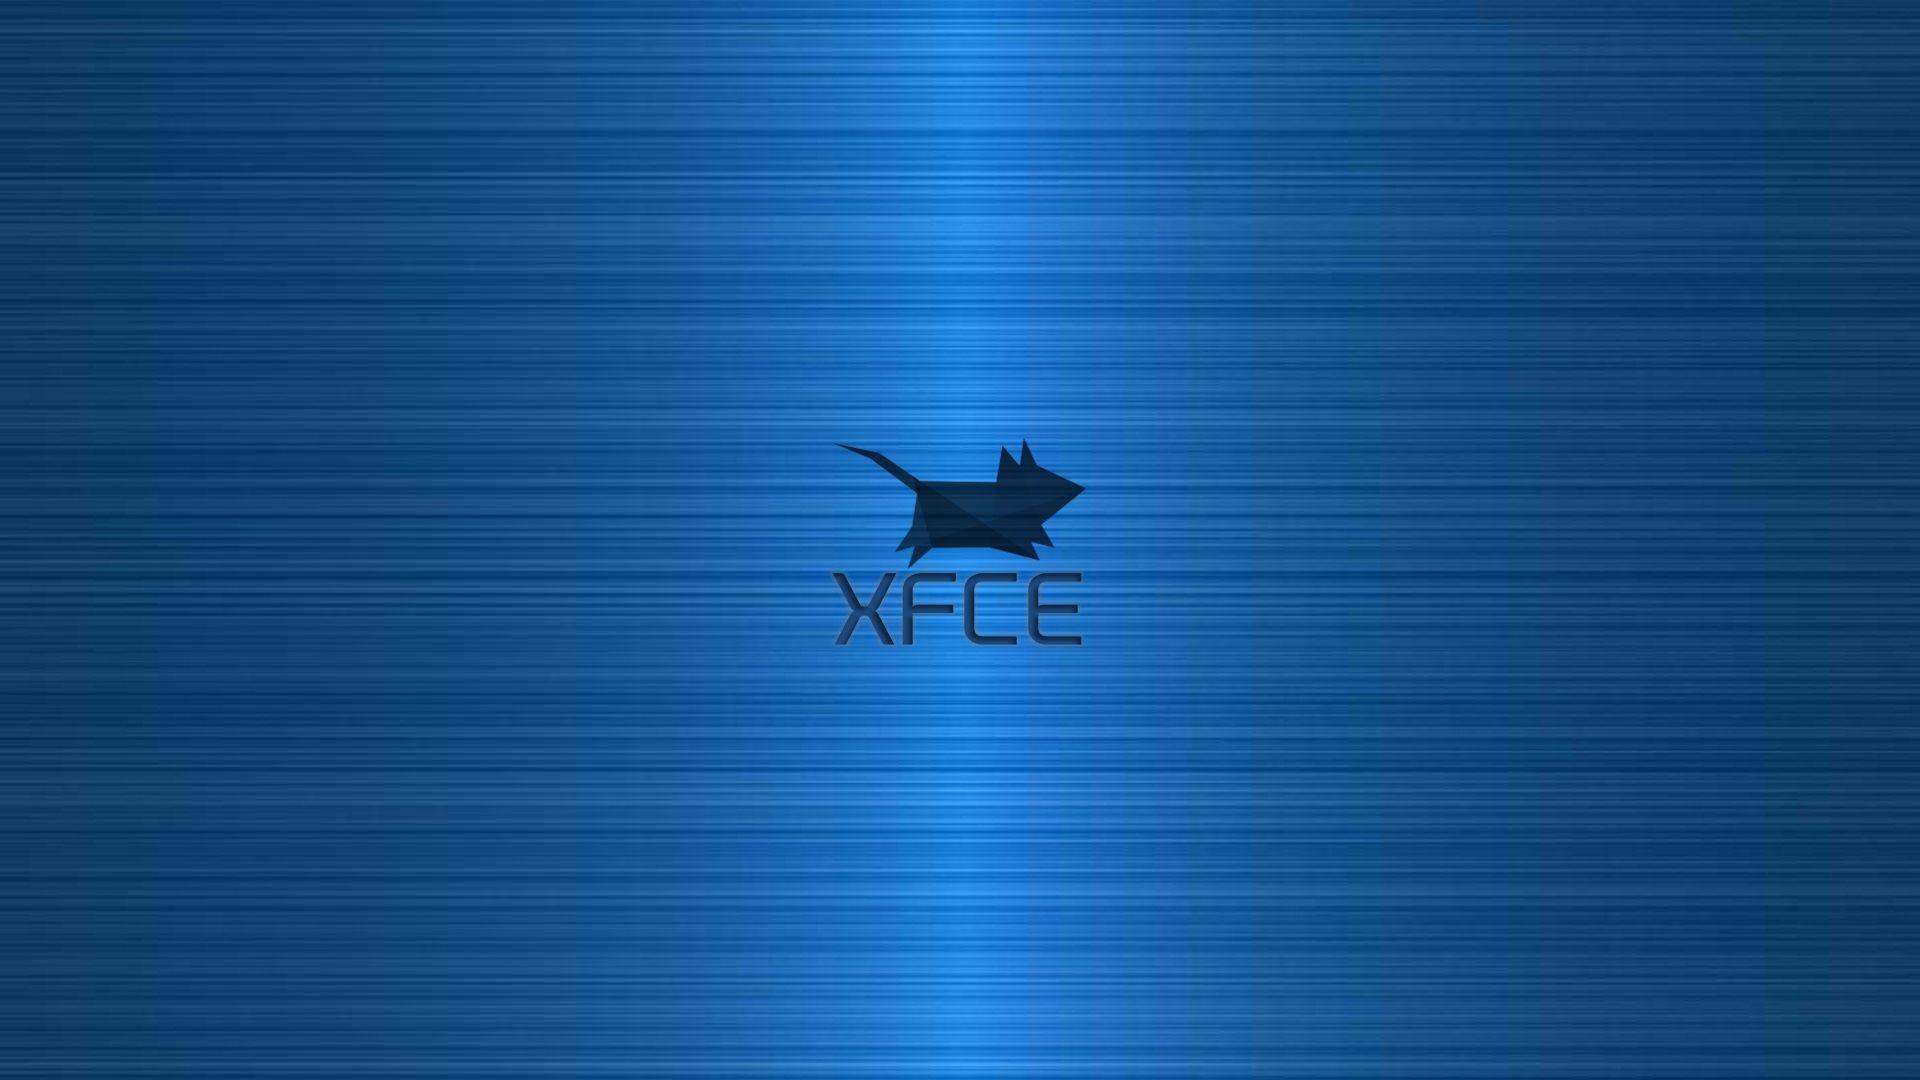 My XFCE desktop